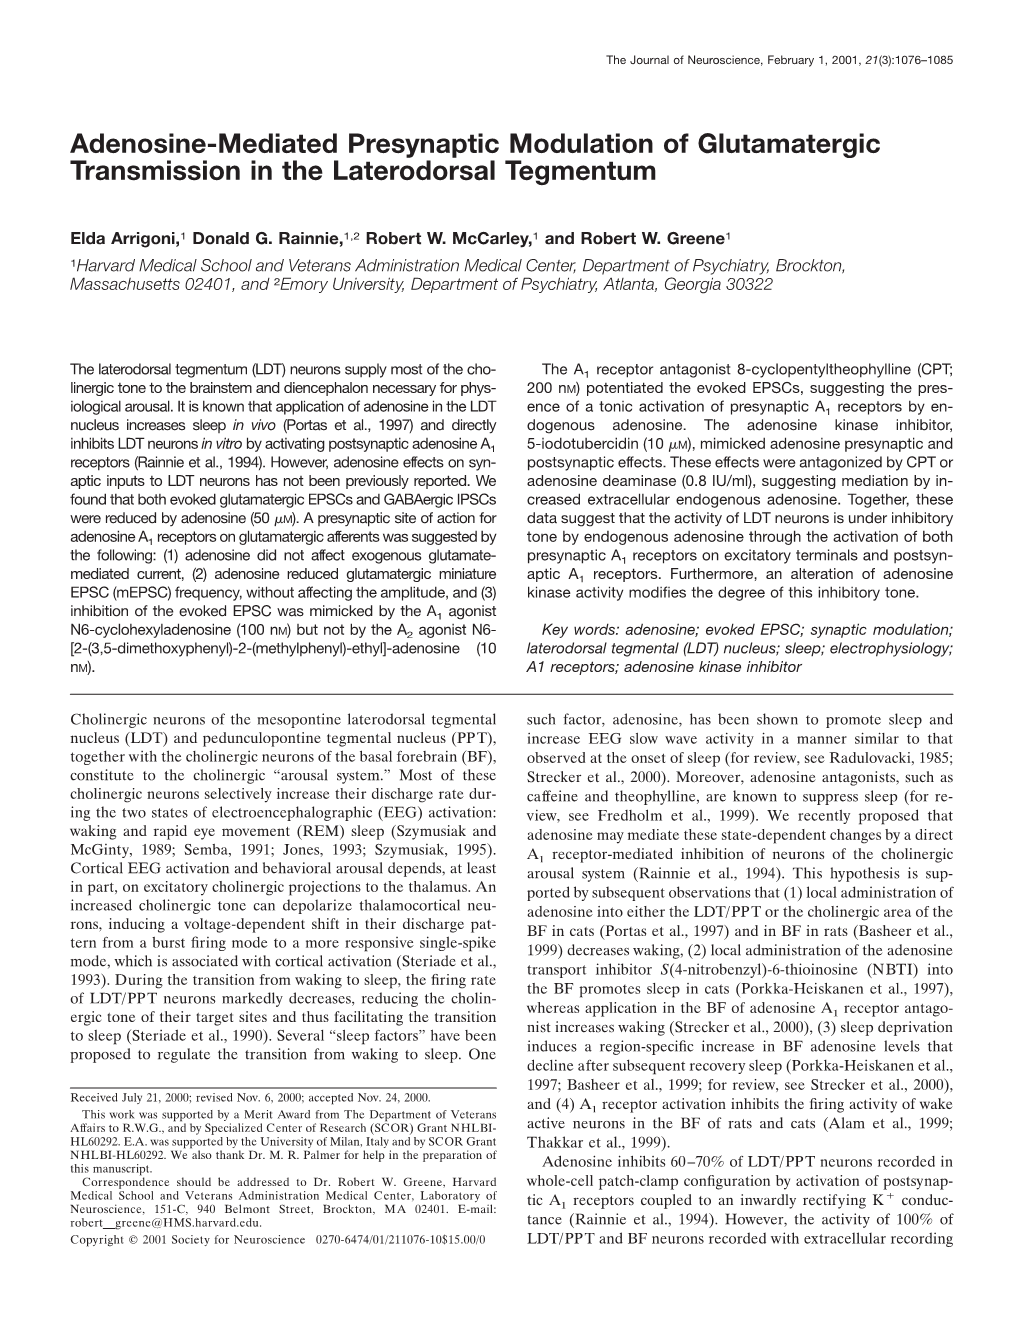 Adenosine-Mediated Presynaptic Modulation of Glutamatergic Transmission in the Laterodorsal Tegmentum